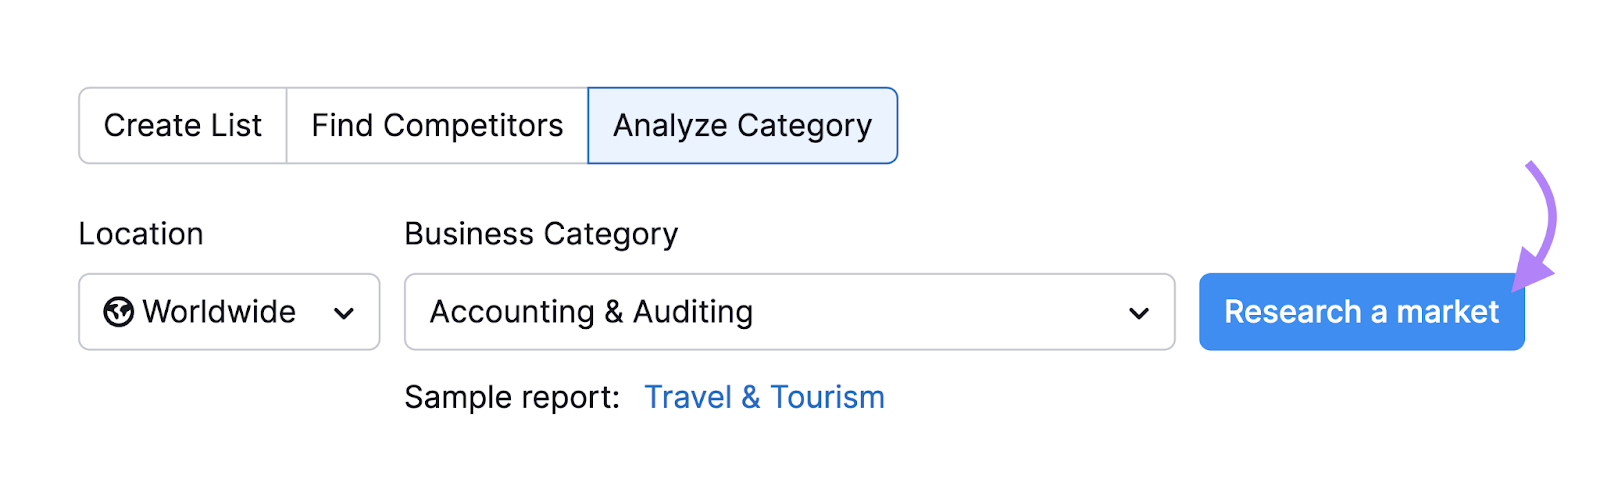 analyze business category in market explorer tool